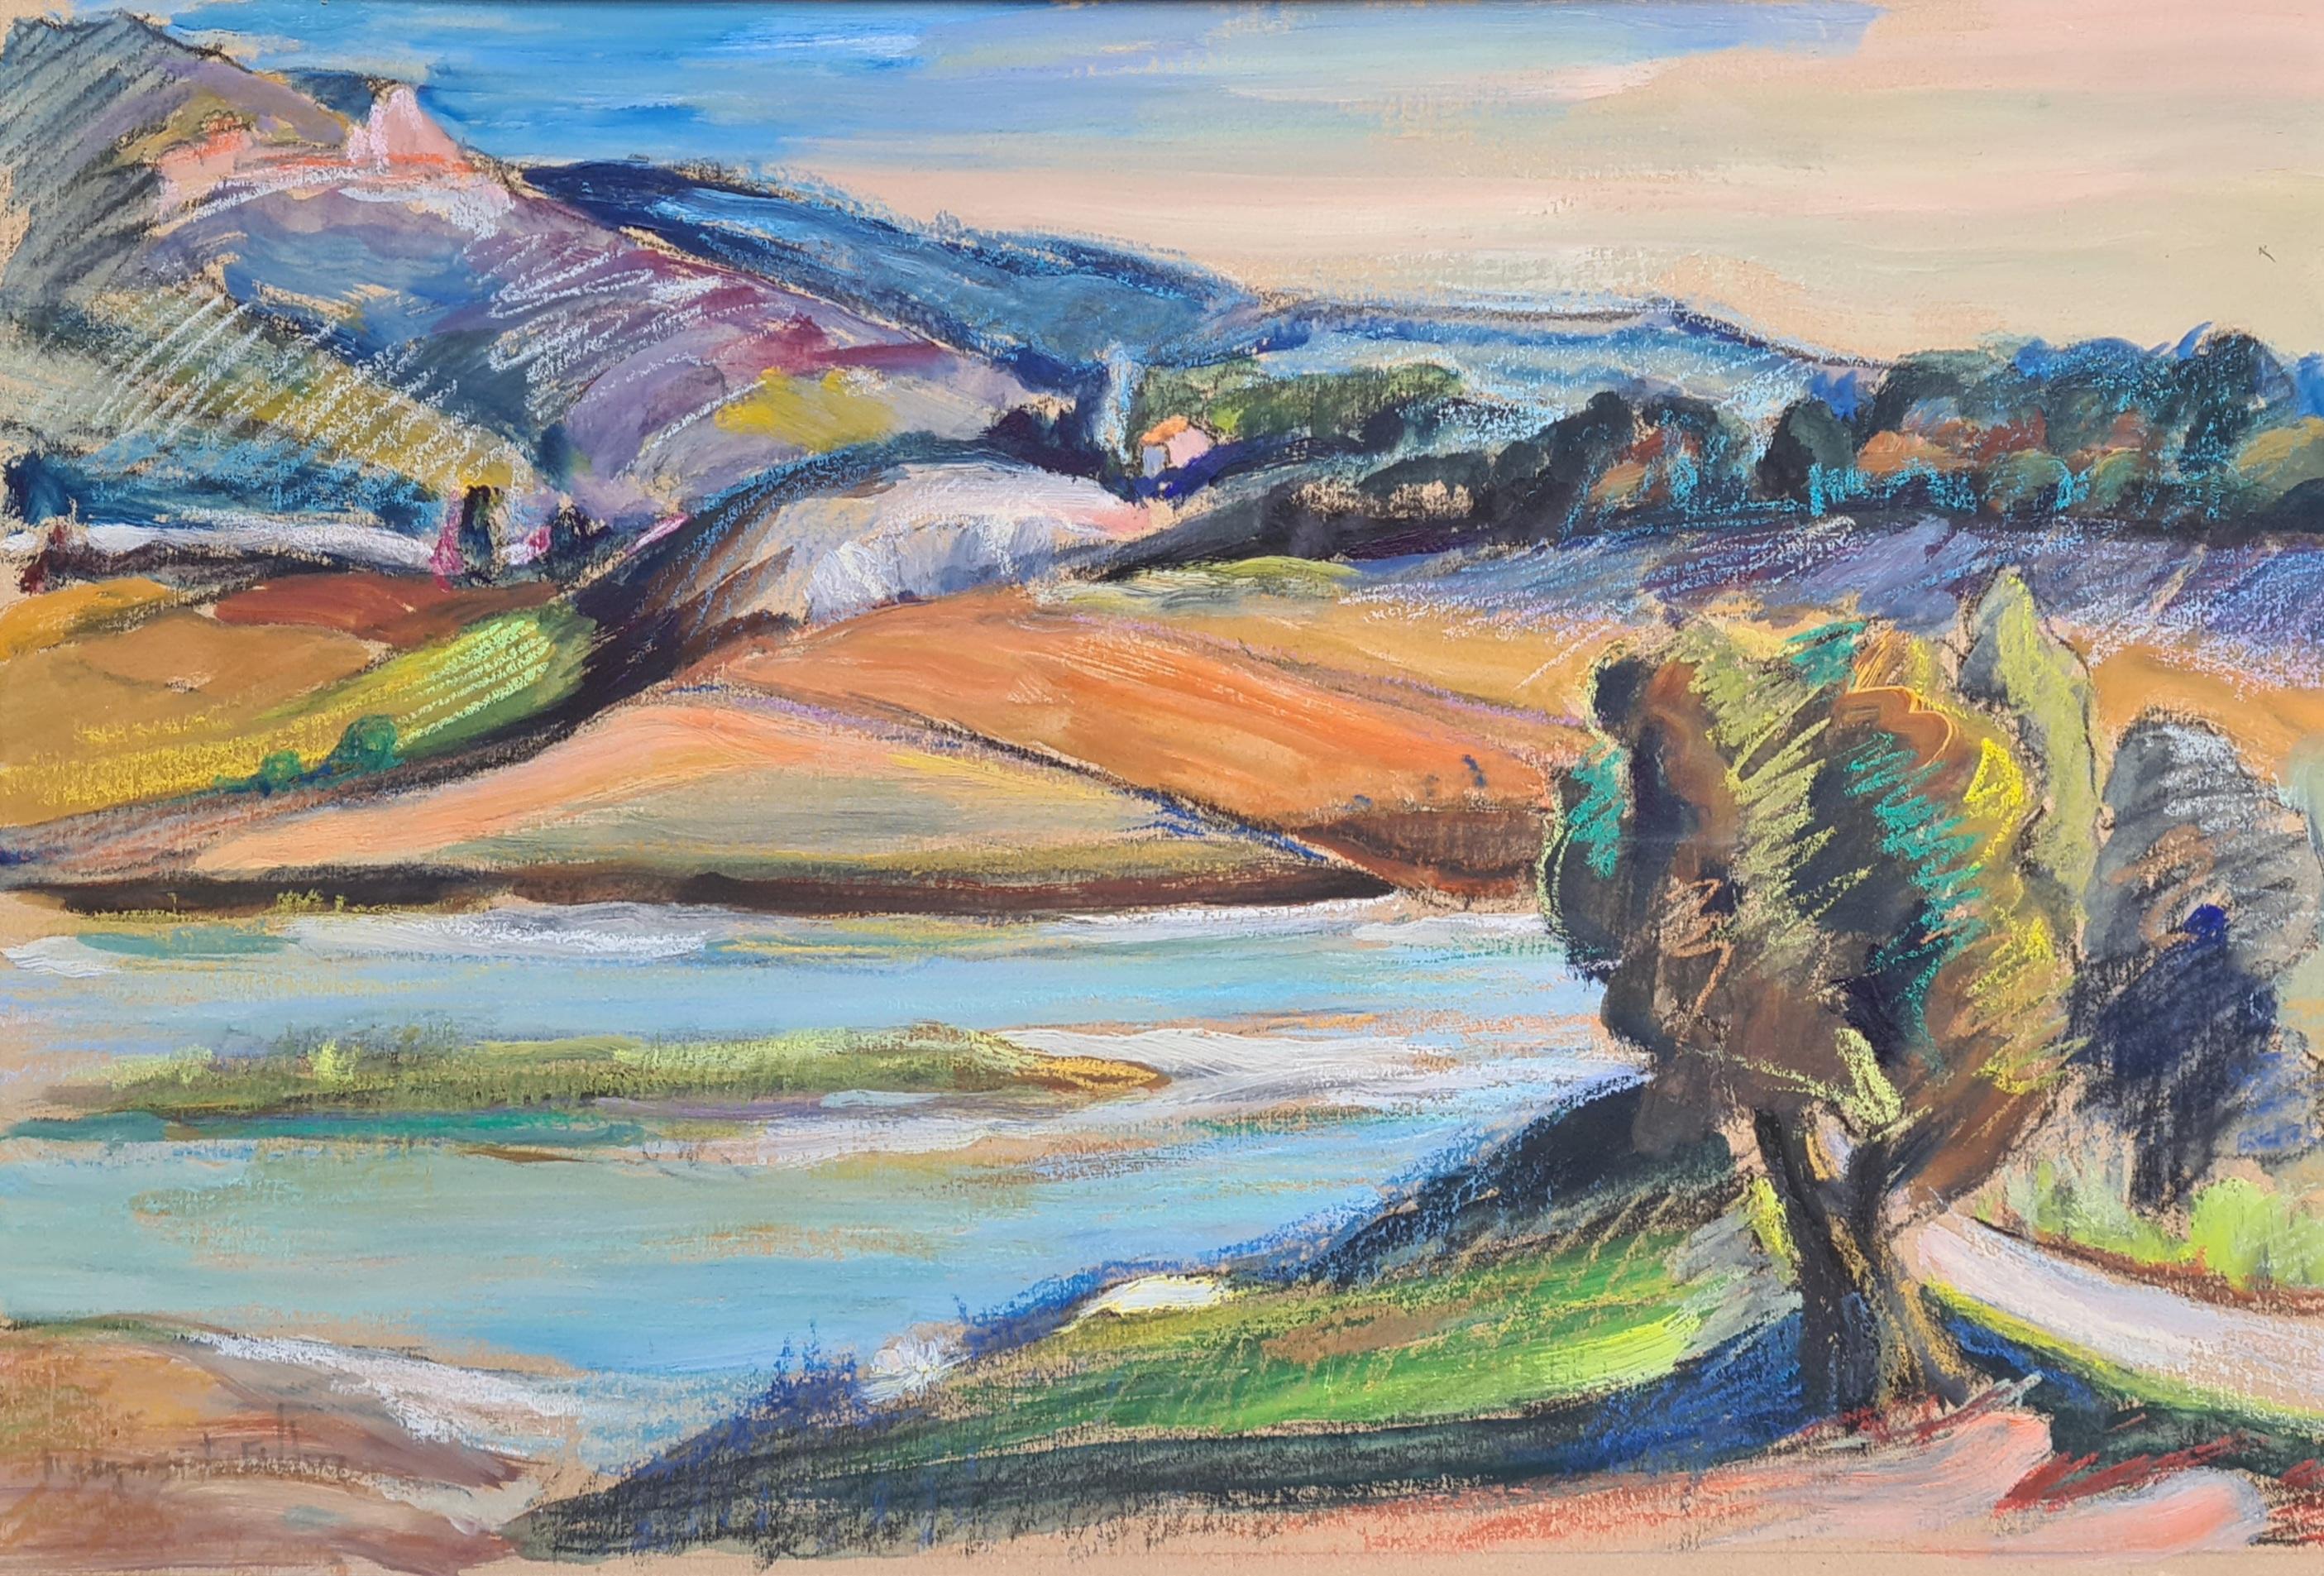 Marguerite Allar Landscape Art - Fauvist View of A French River and Mountain Landscape, The Verdon, Provence.